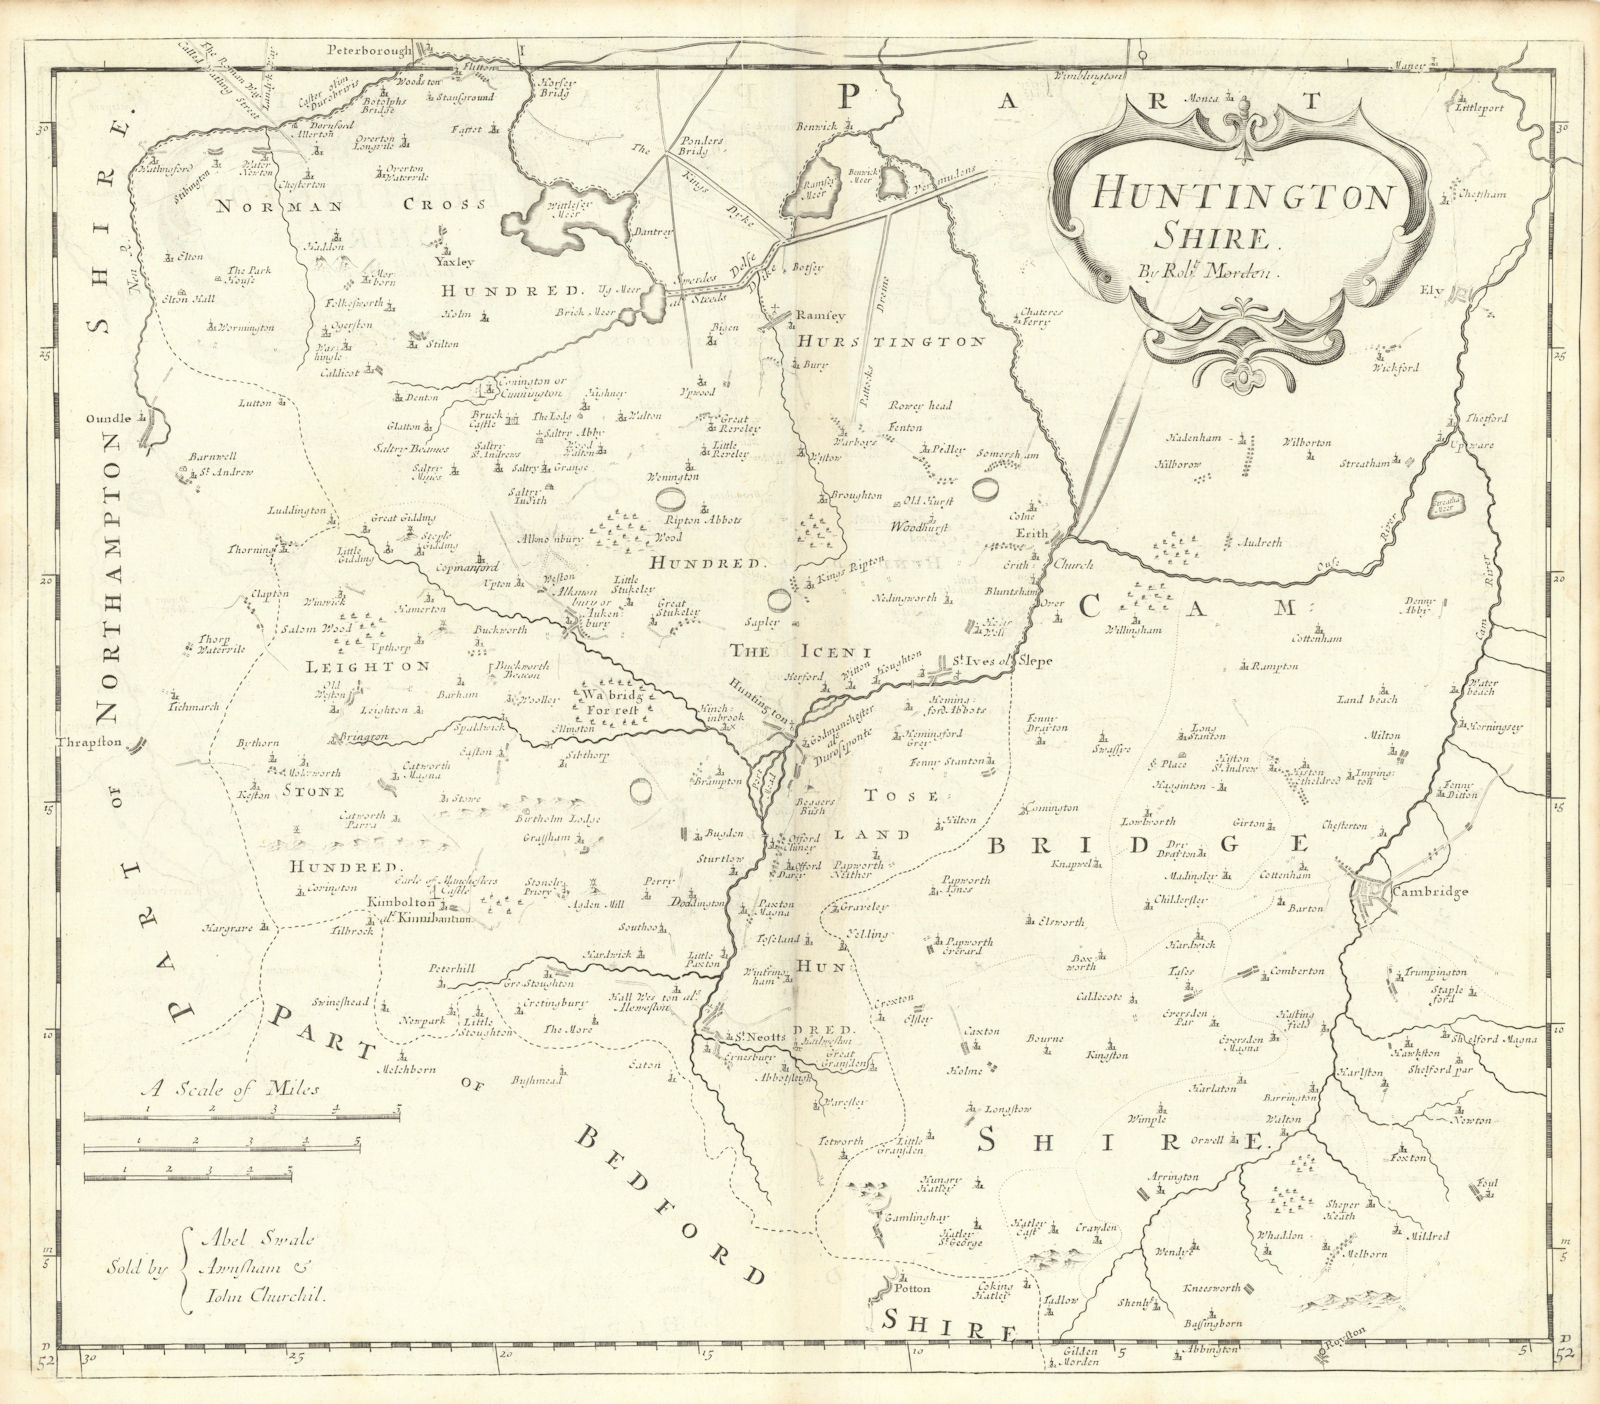 'HUNTINGTON SHIRE' Huntingdonshire by ROBERT MORDEN. Camden's Britannia 1722 map